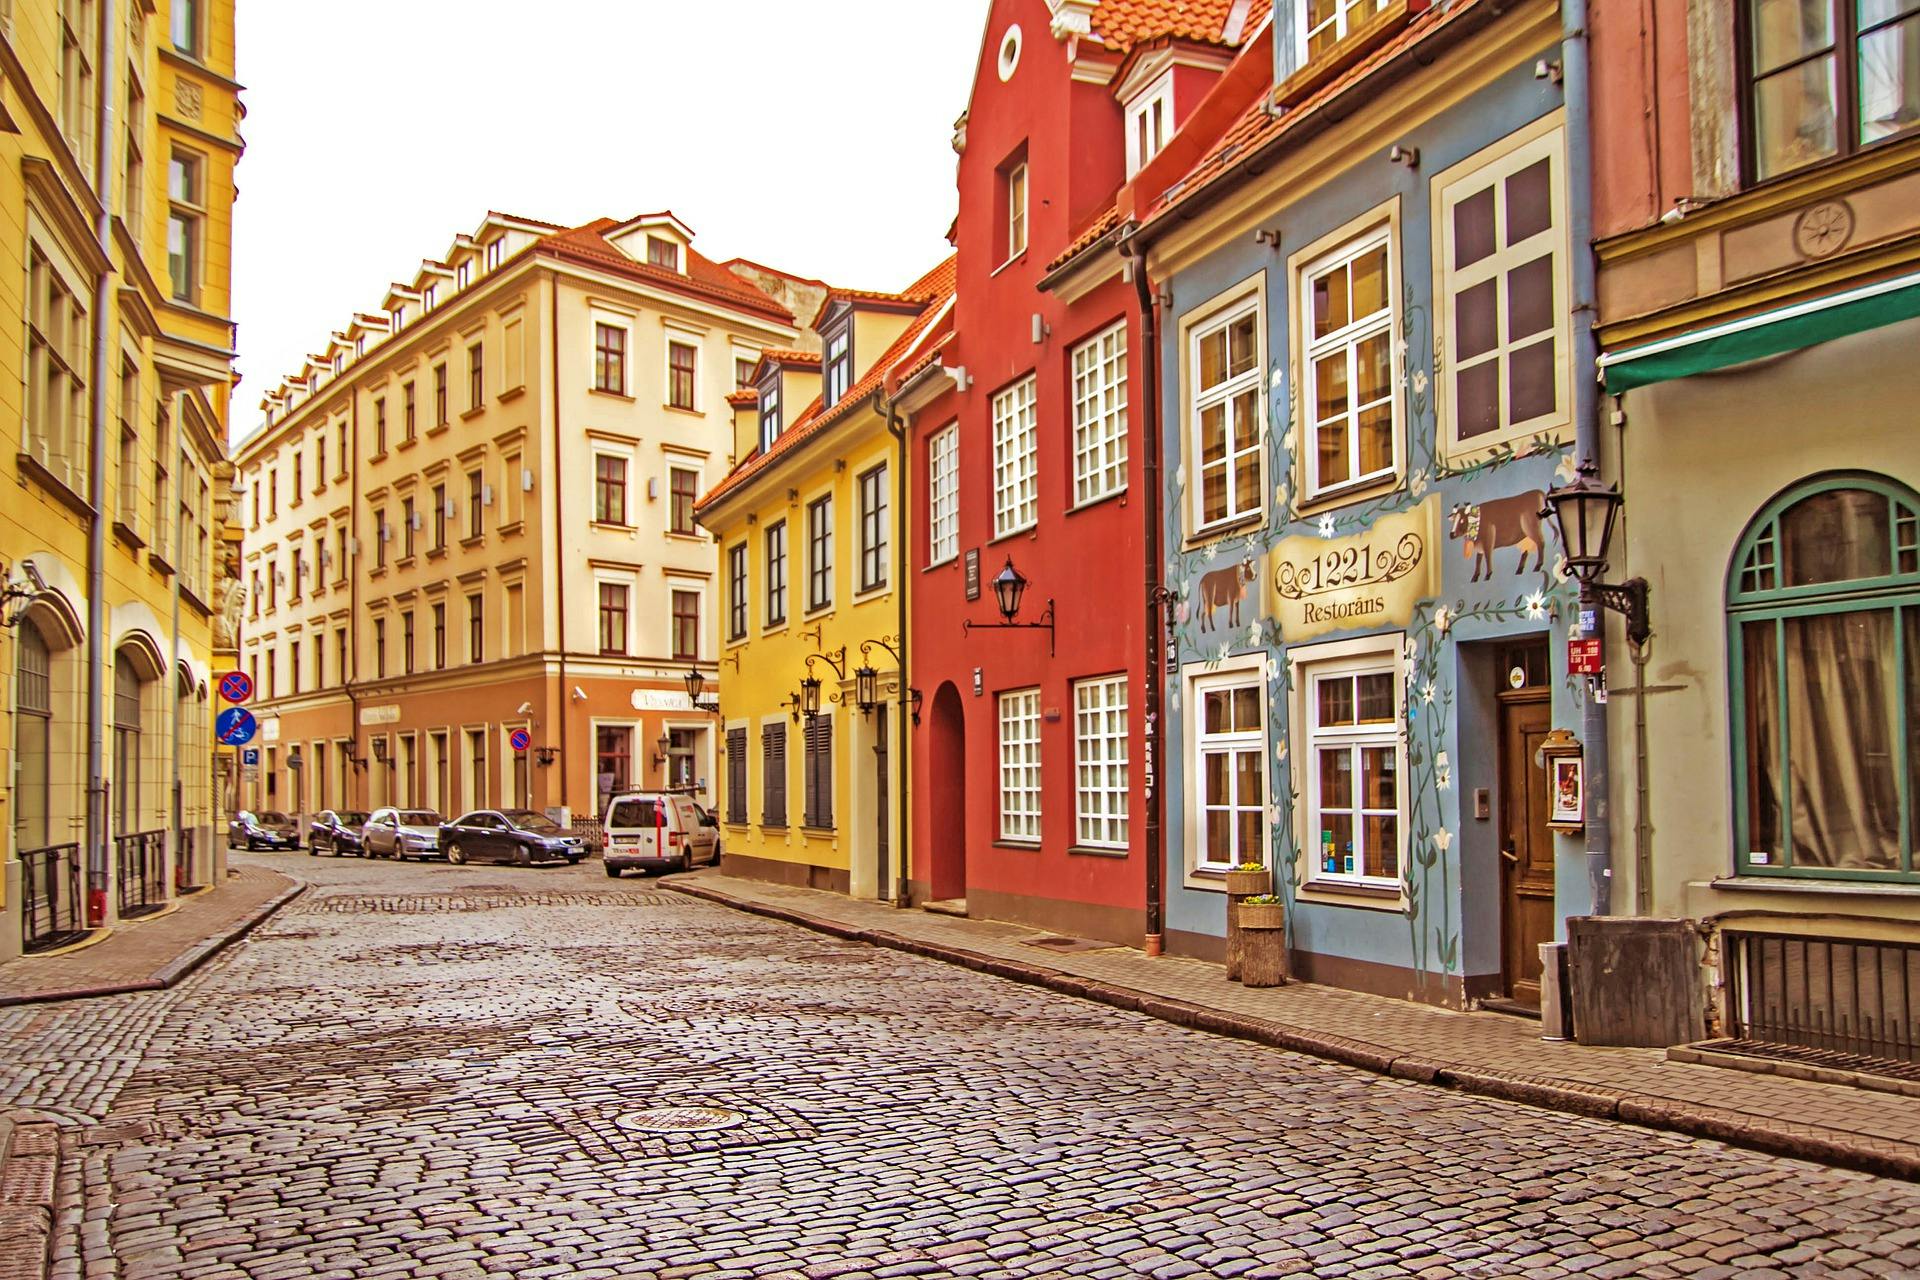 Exclusivo recorrido histórico a pie por Riga con un local